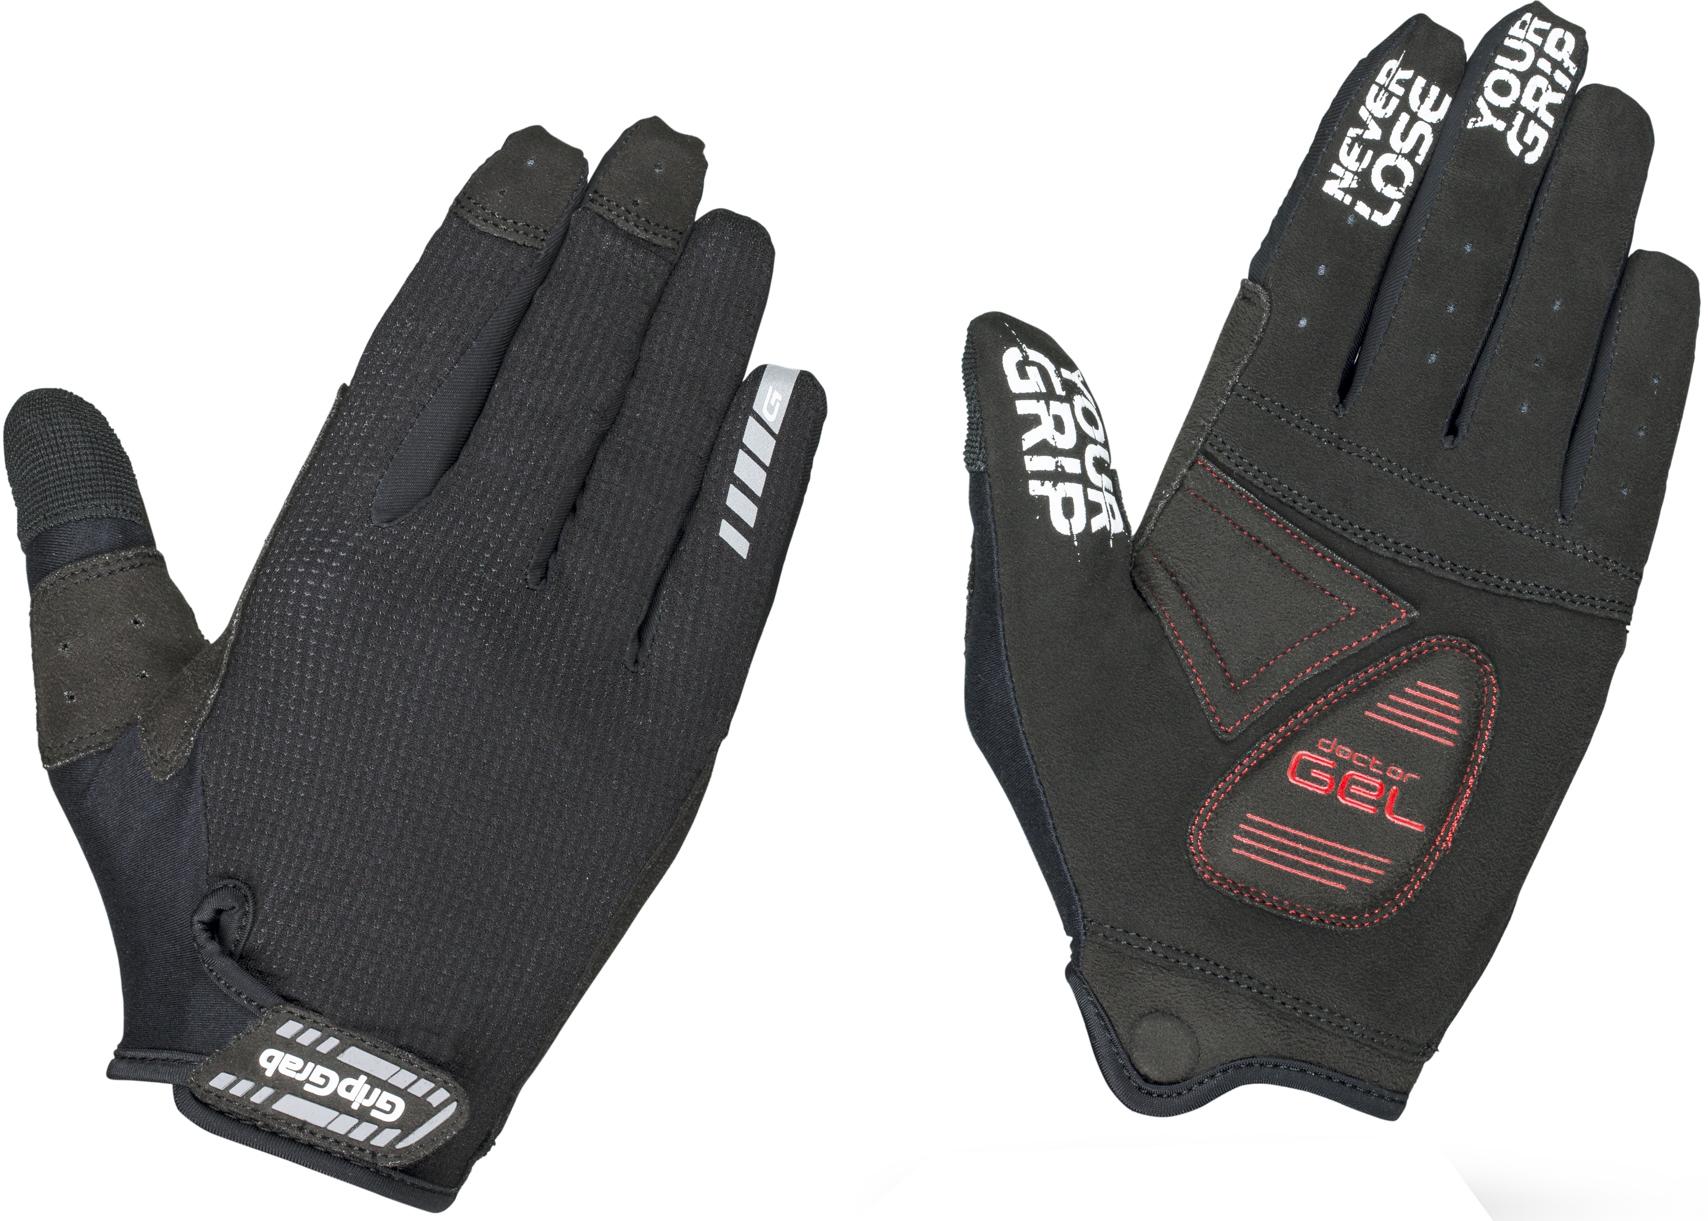 Gripgrab Supergel Xc Touchscreen Gloves  Black